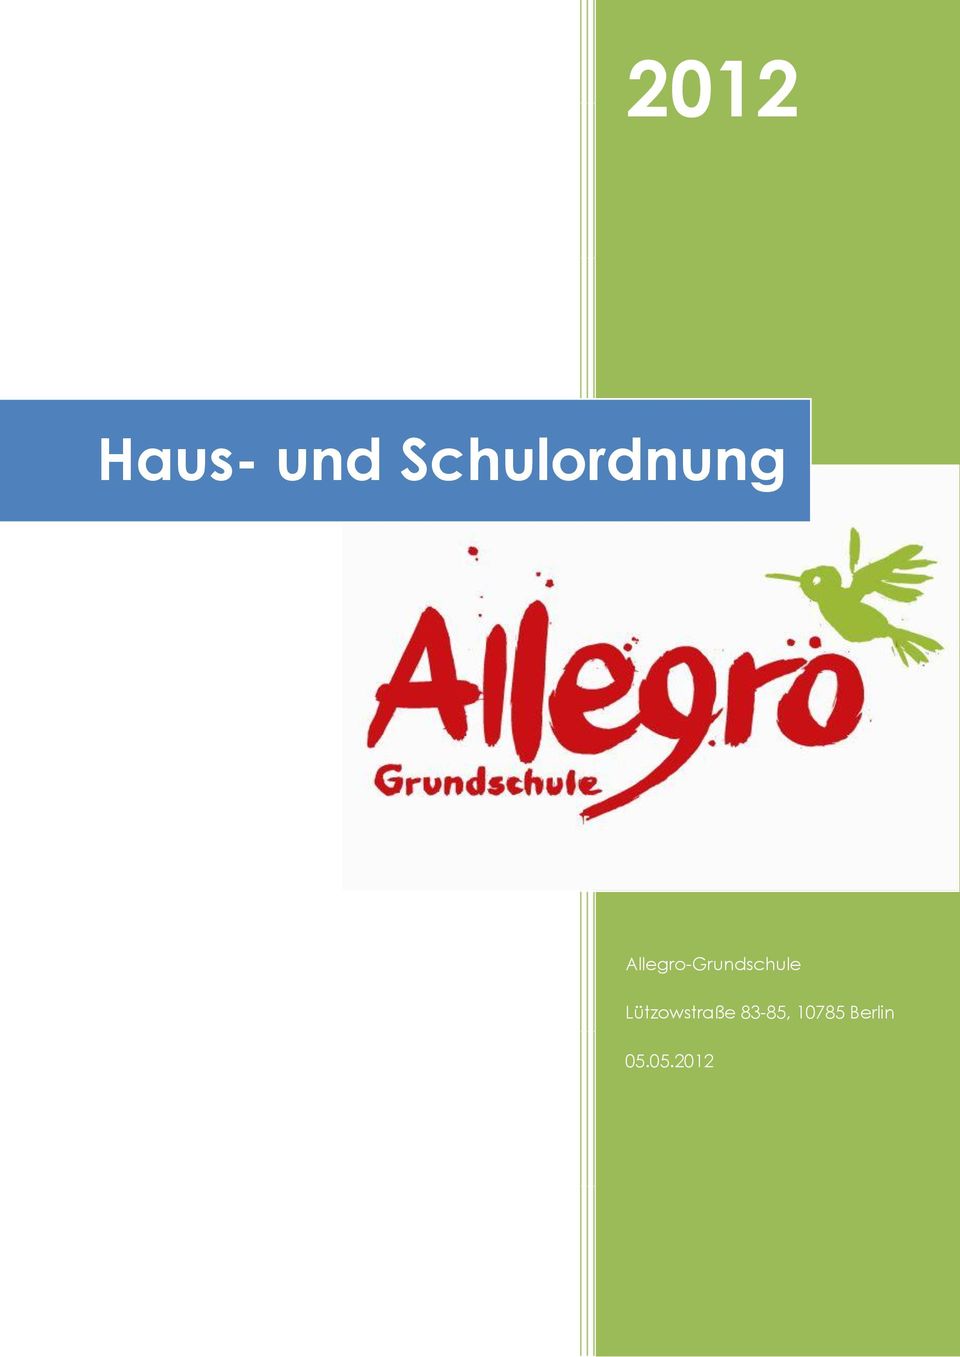 Allegro-Grundschule